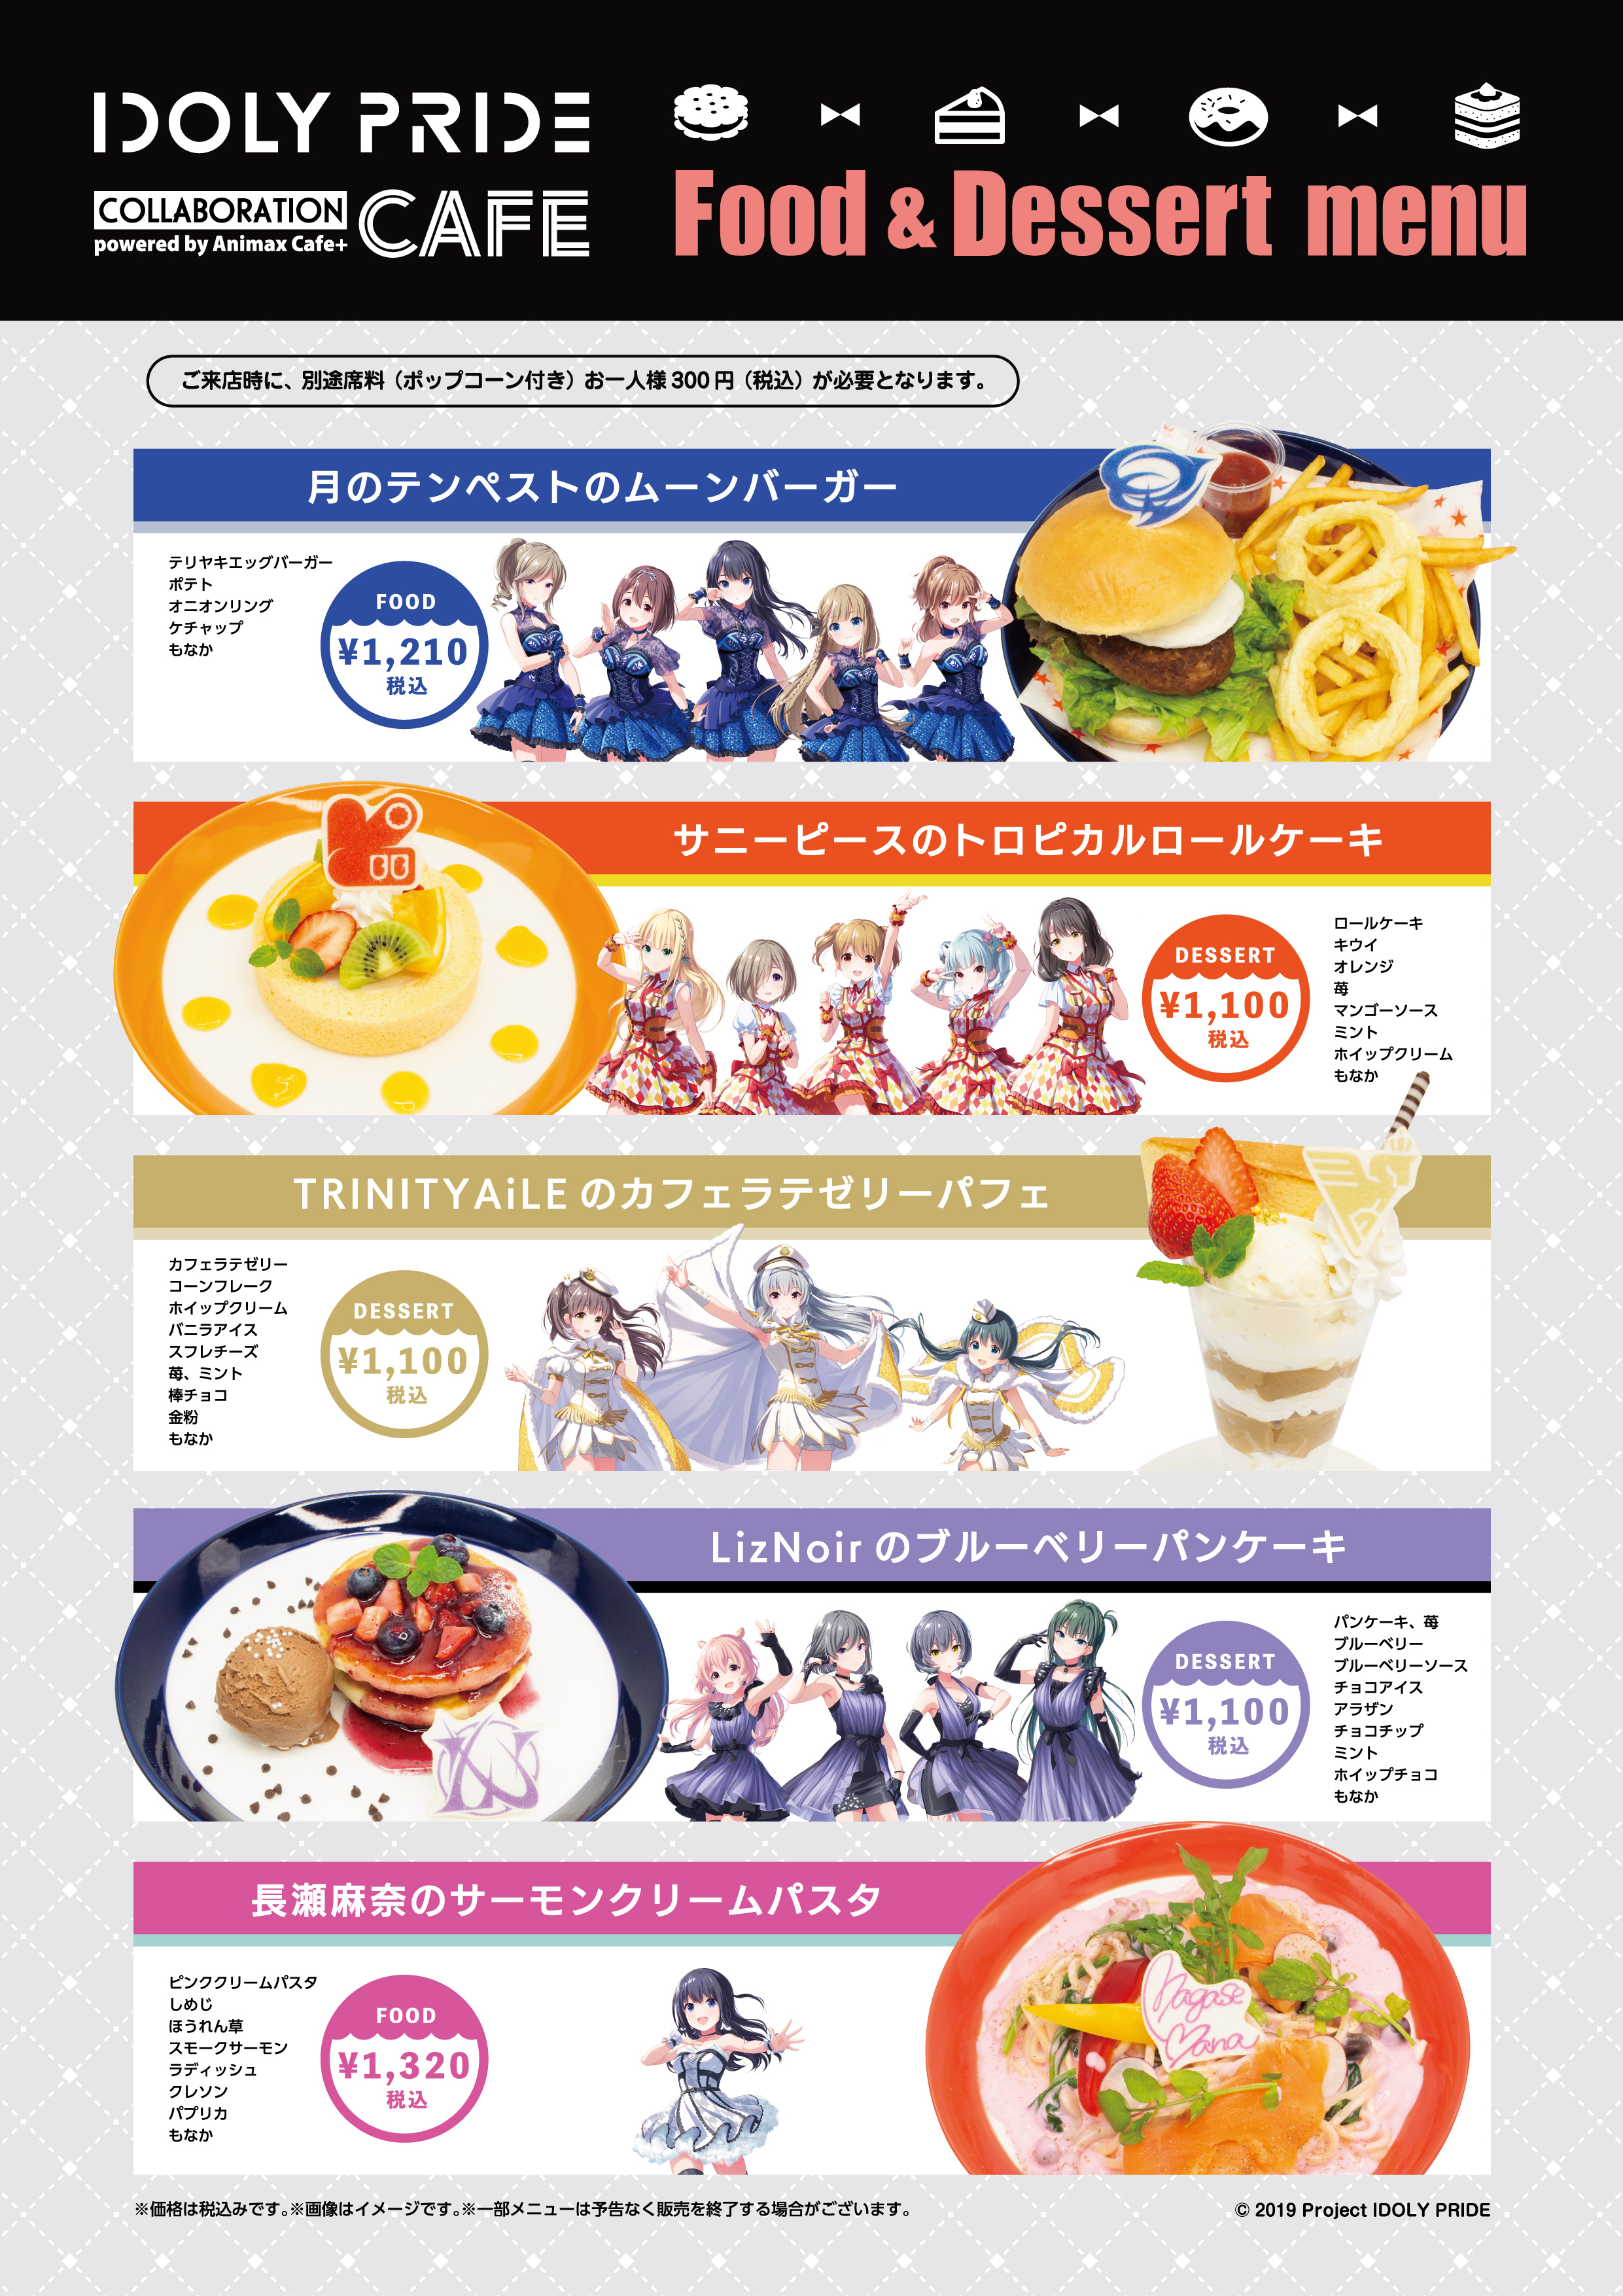 Animax Cafe でコラボカフェ詳細情報公開 Idoly Pride 公式サイト